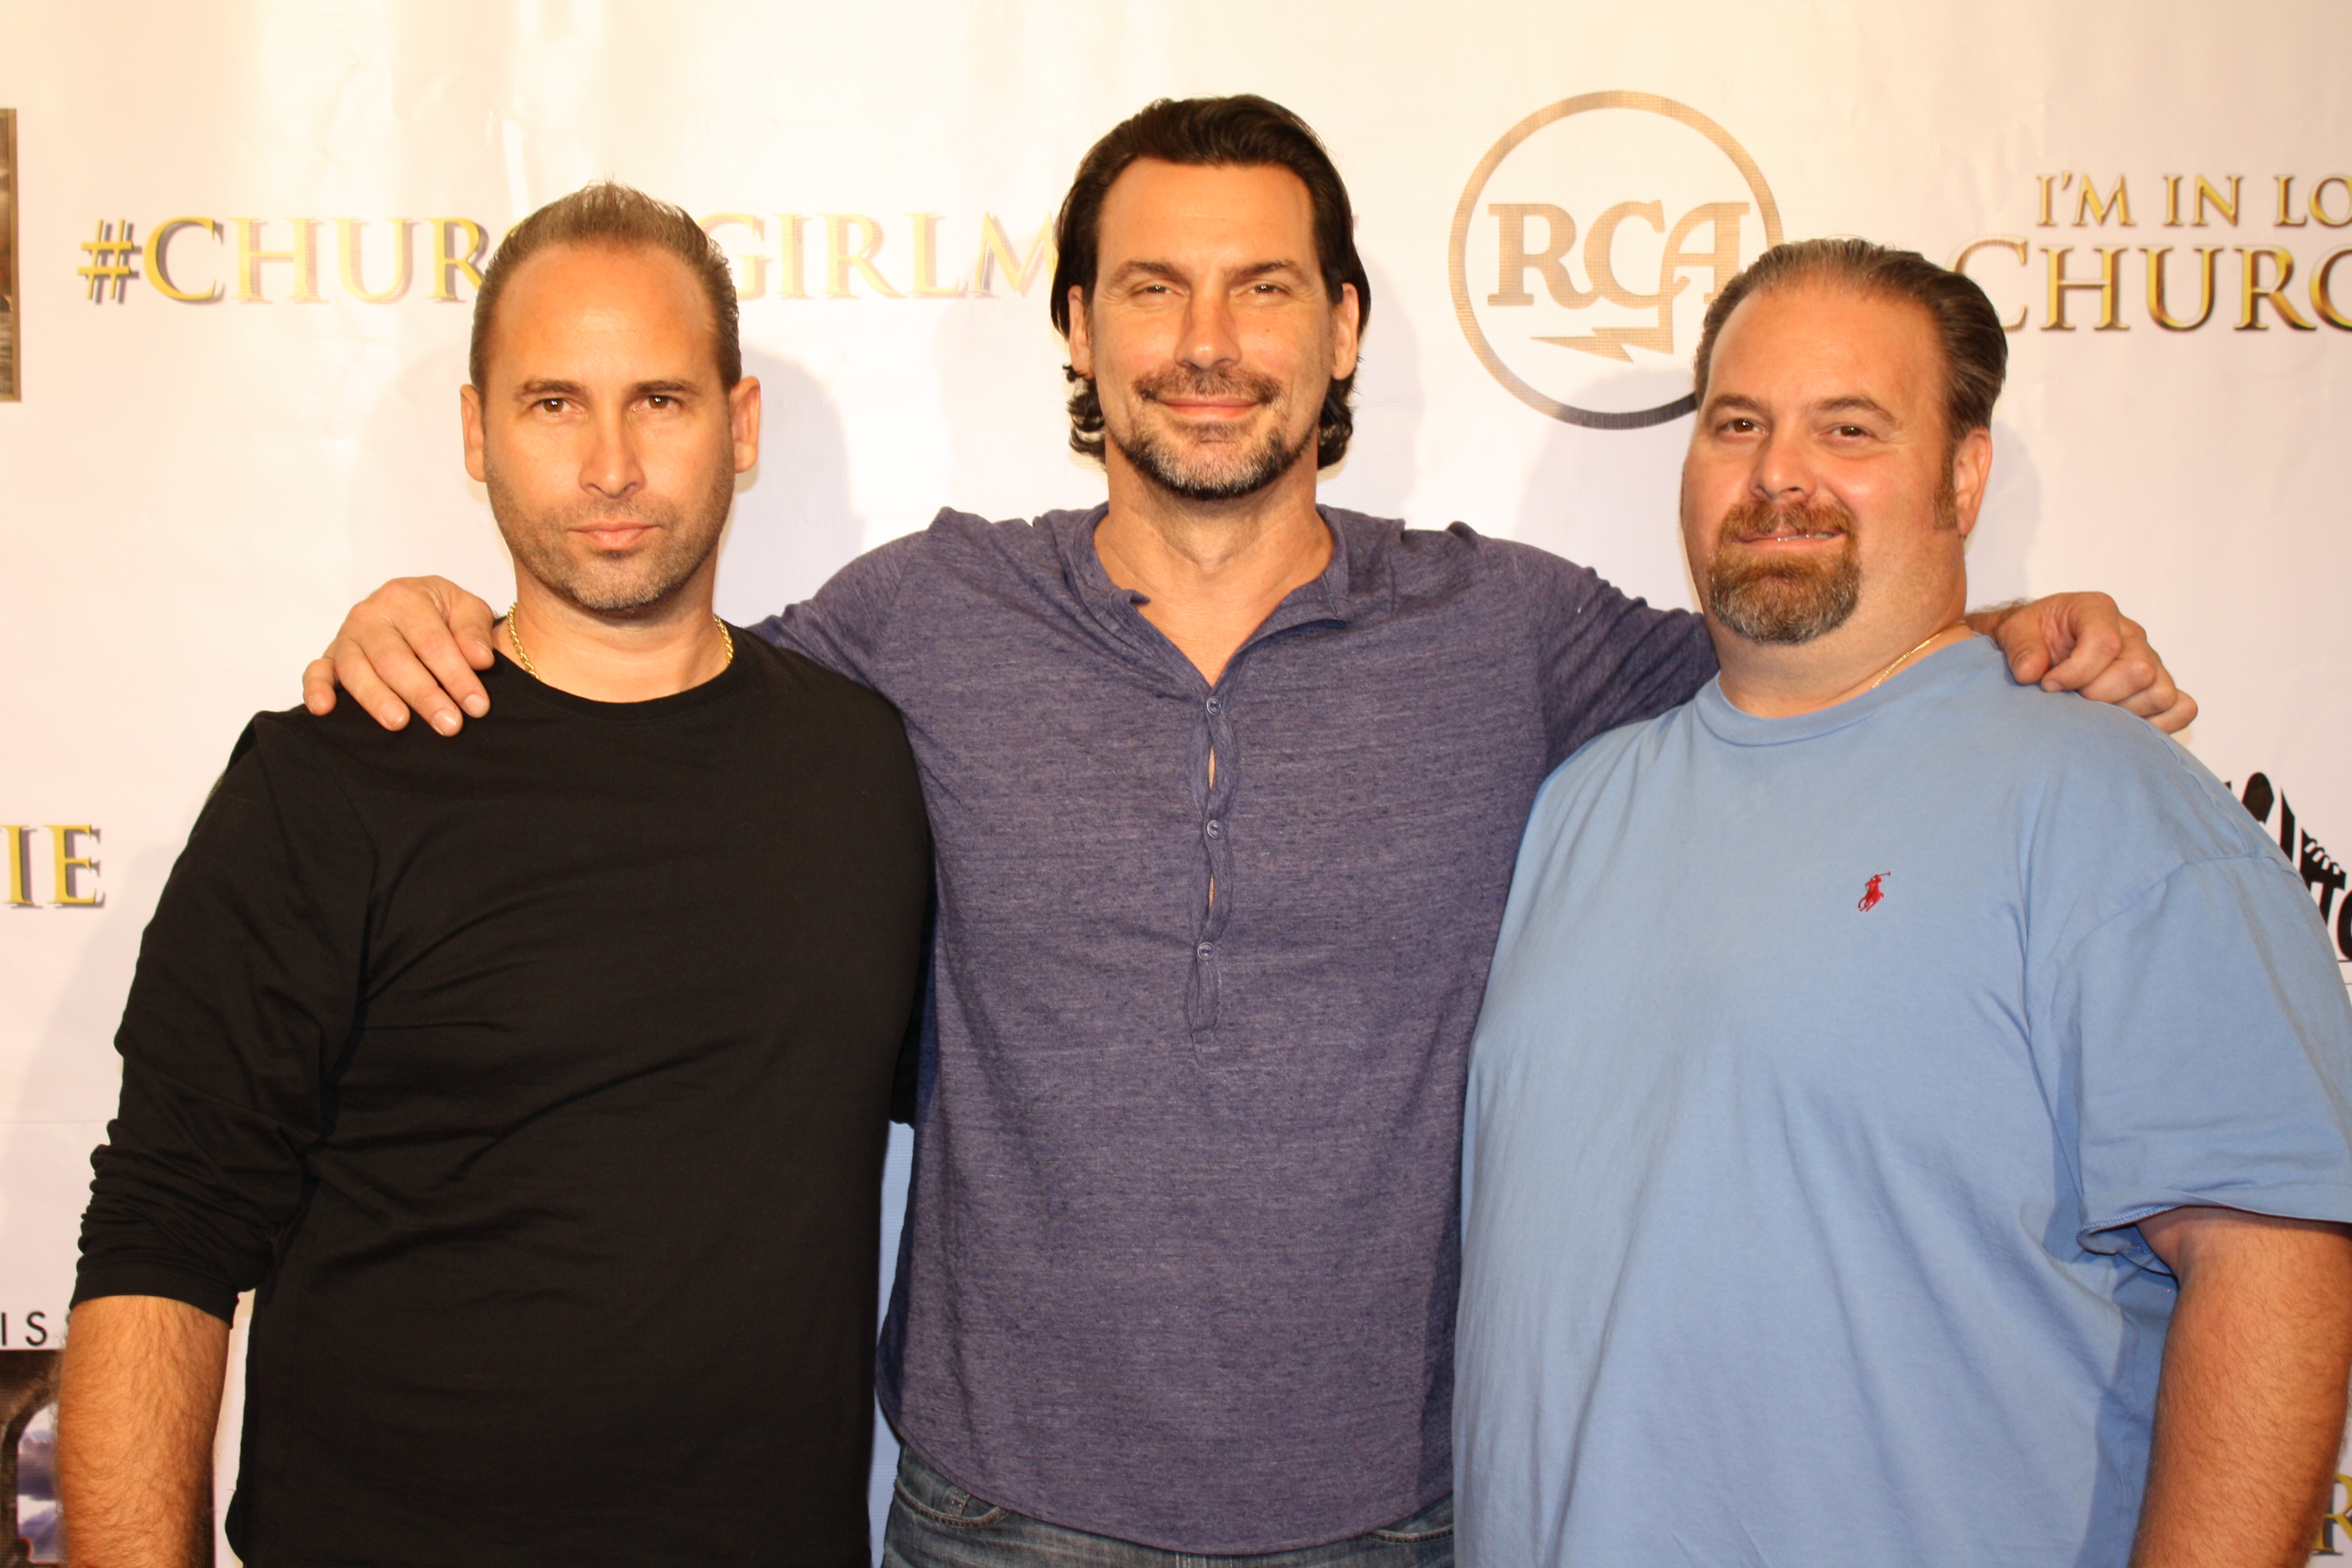 Director Steve Race with Director Carmine Cangialosi and Producer Michael K. Race